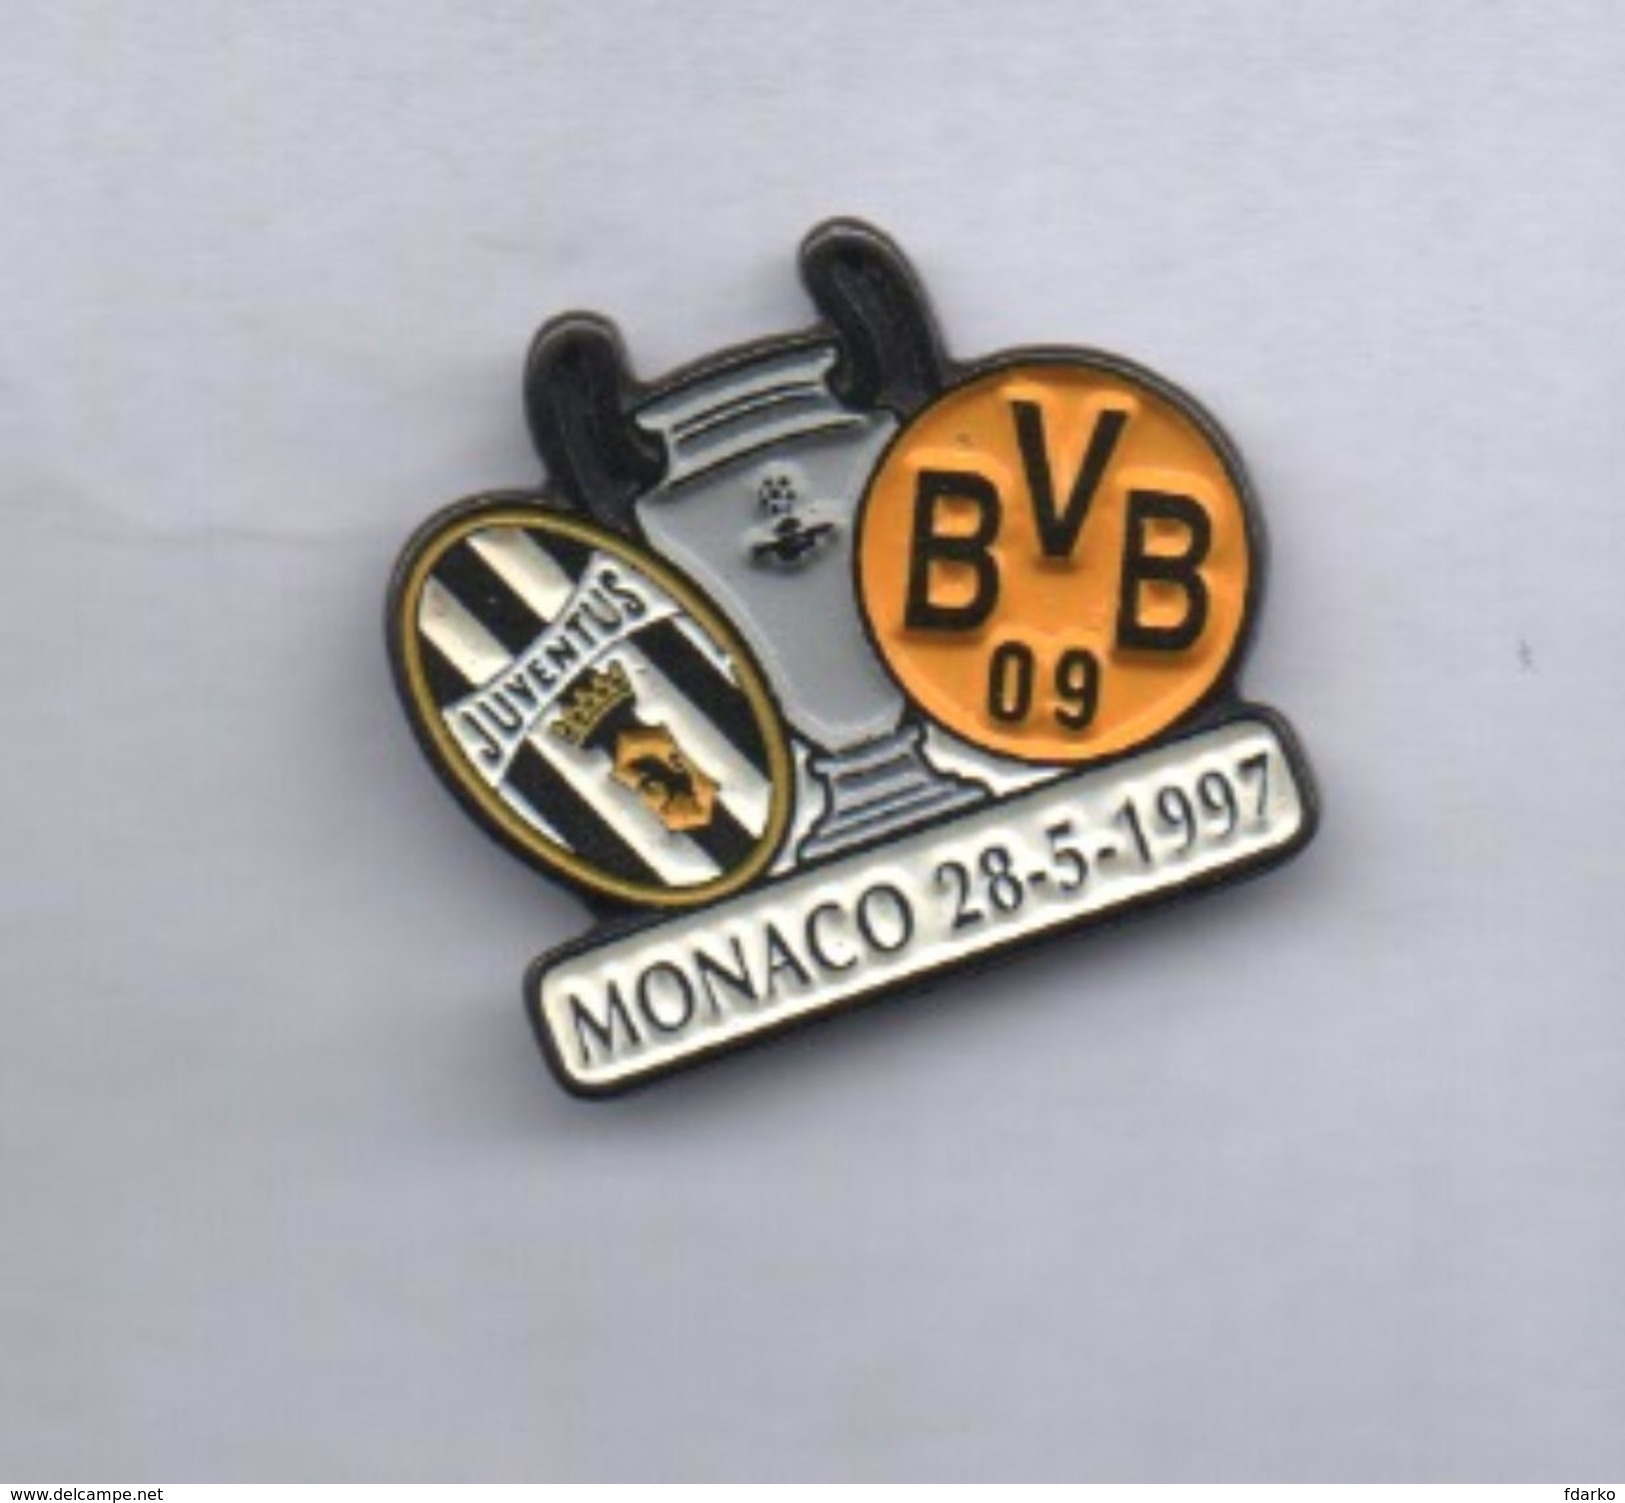 Finale Coppa UEFA Champions League 1996-199 Juve BVB Monaco 28/5/1997 BiancoNero Football Pins Juventus Ufficiale - Calcio